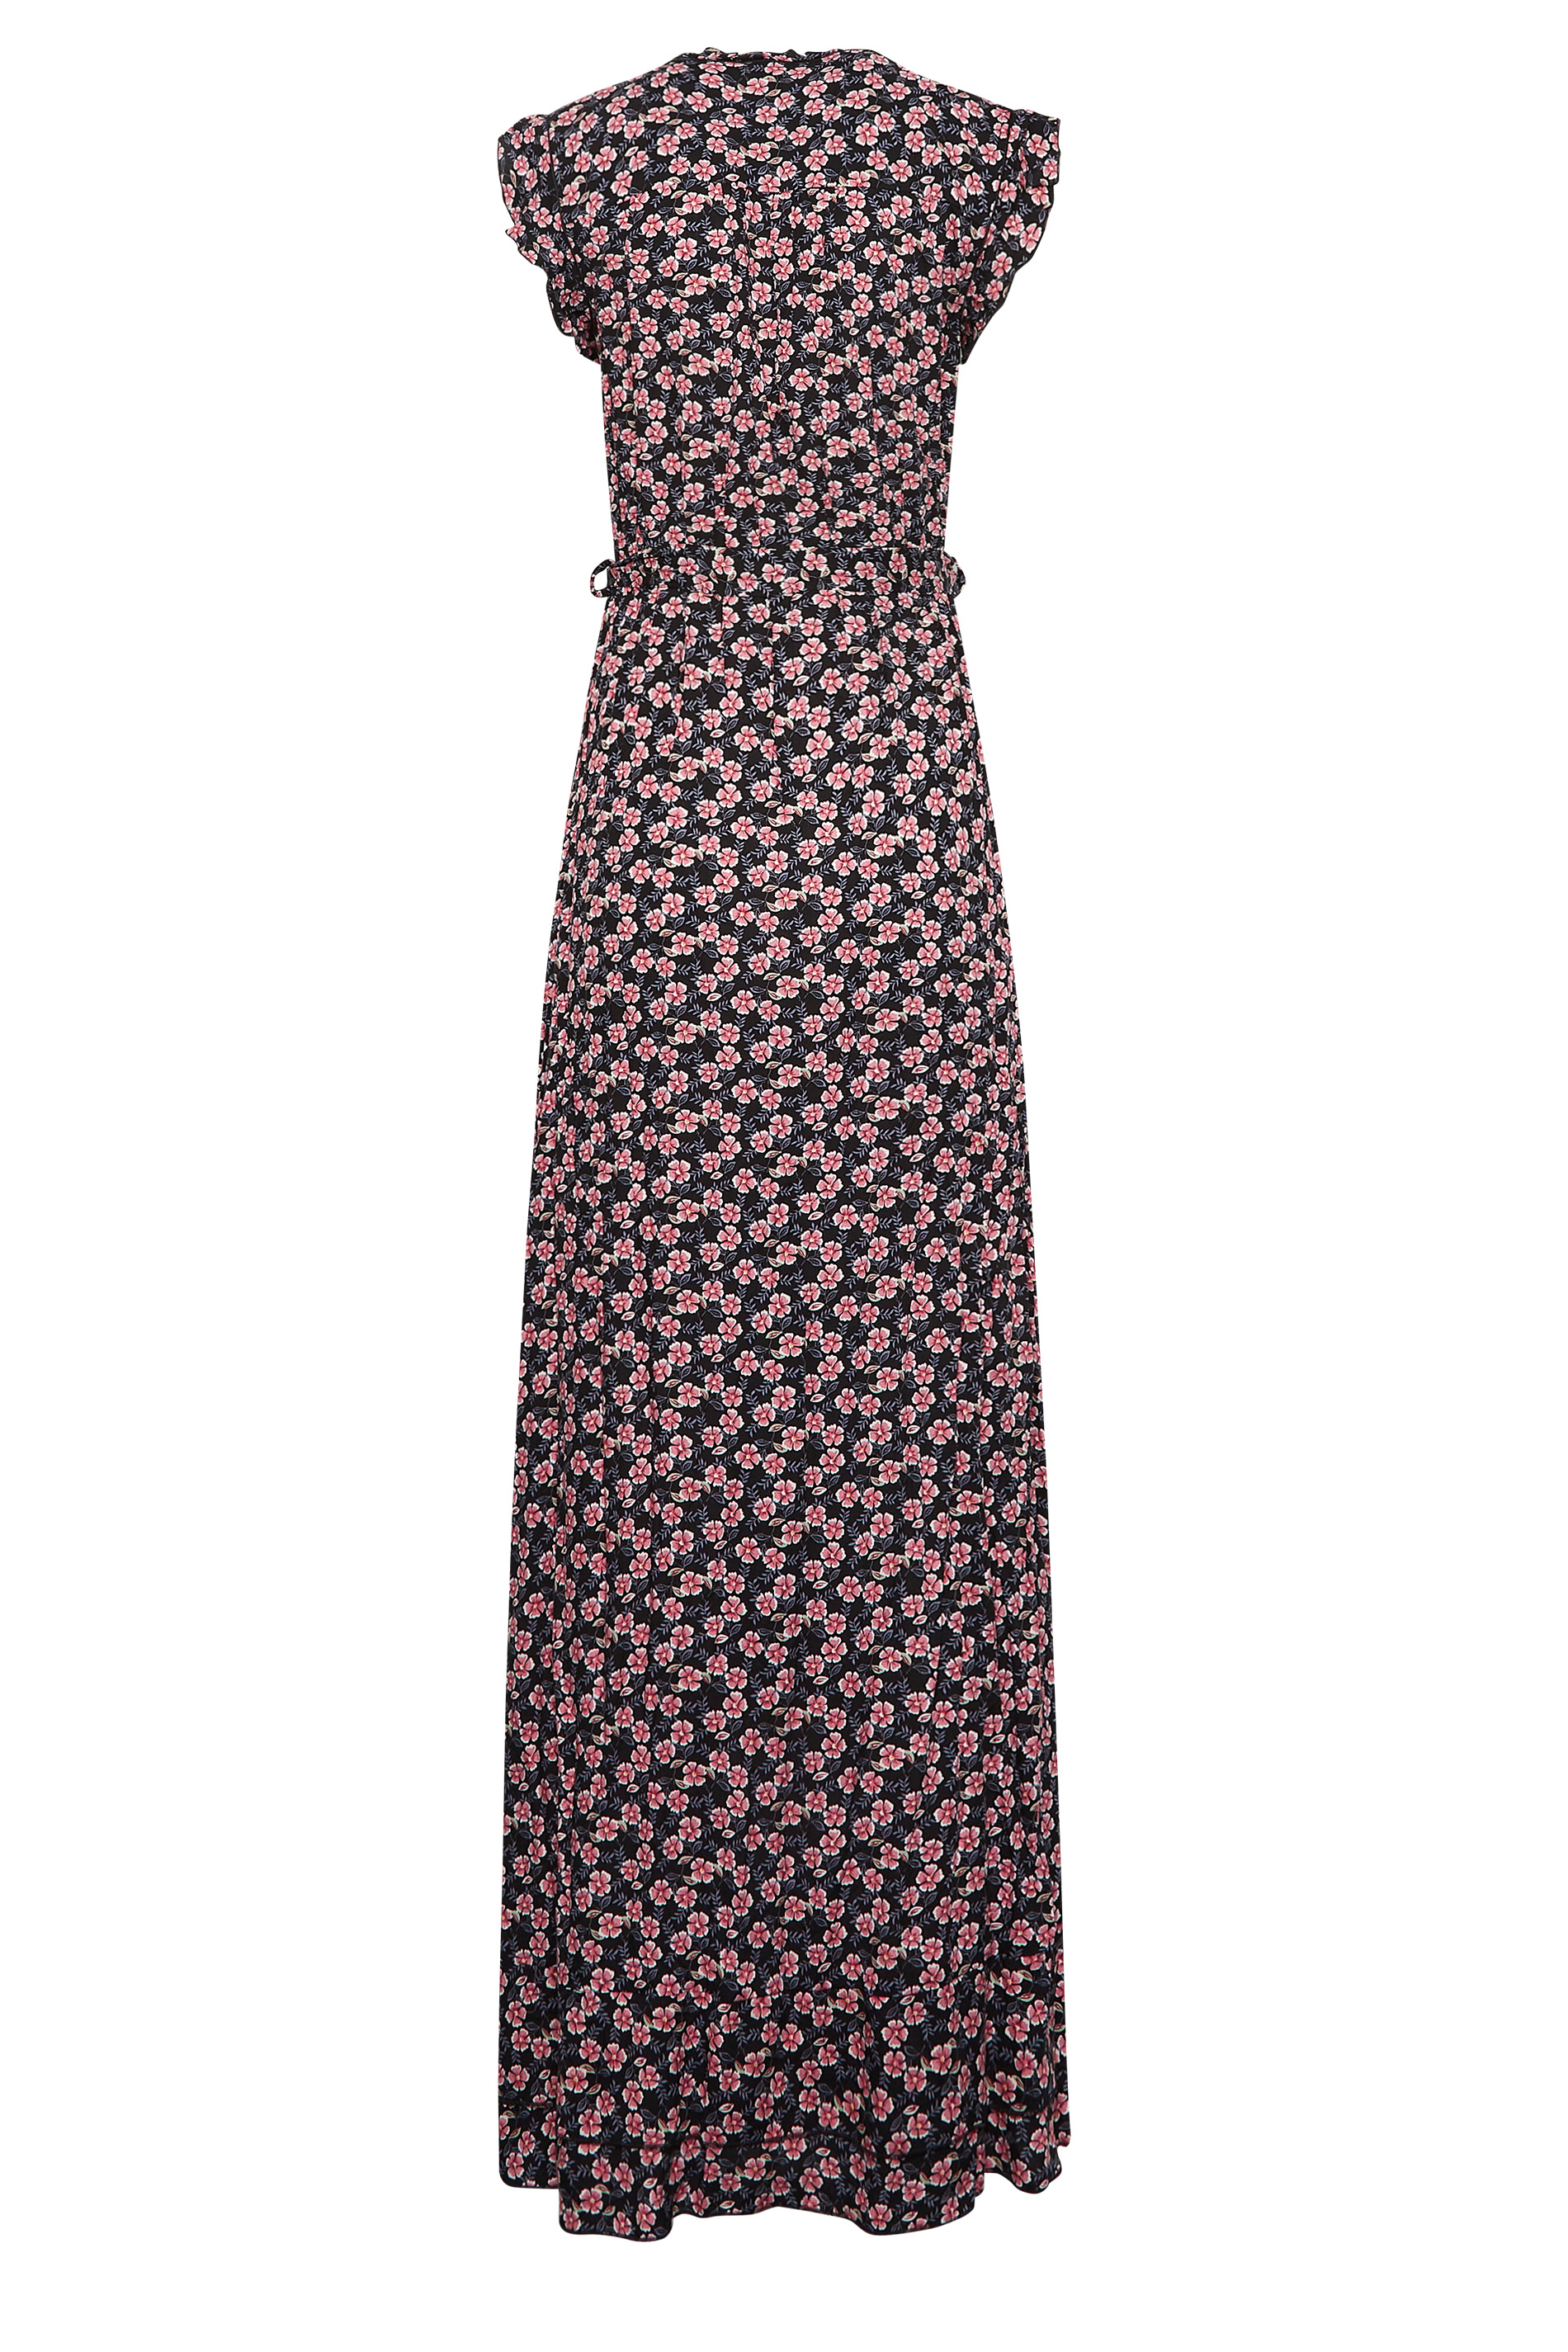 LTS Tall Women's Black Ditsy Floral Frill Maxi Dress | Long Tall Sally 3